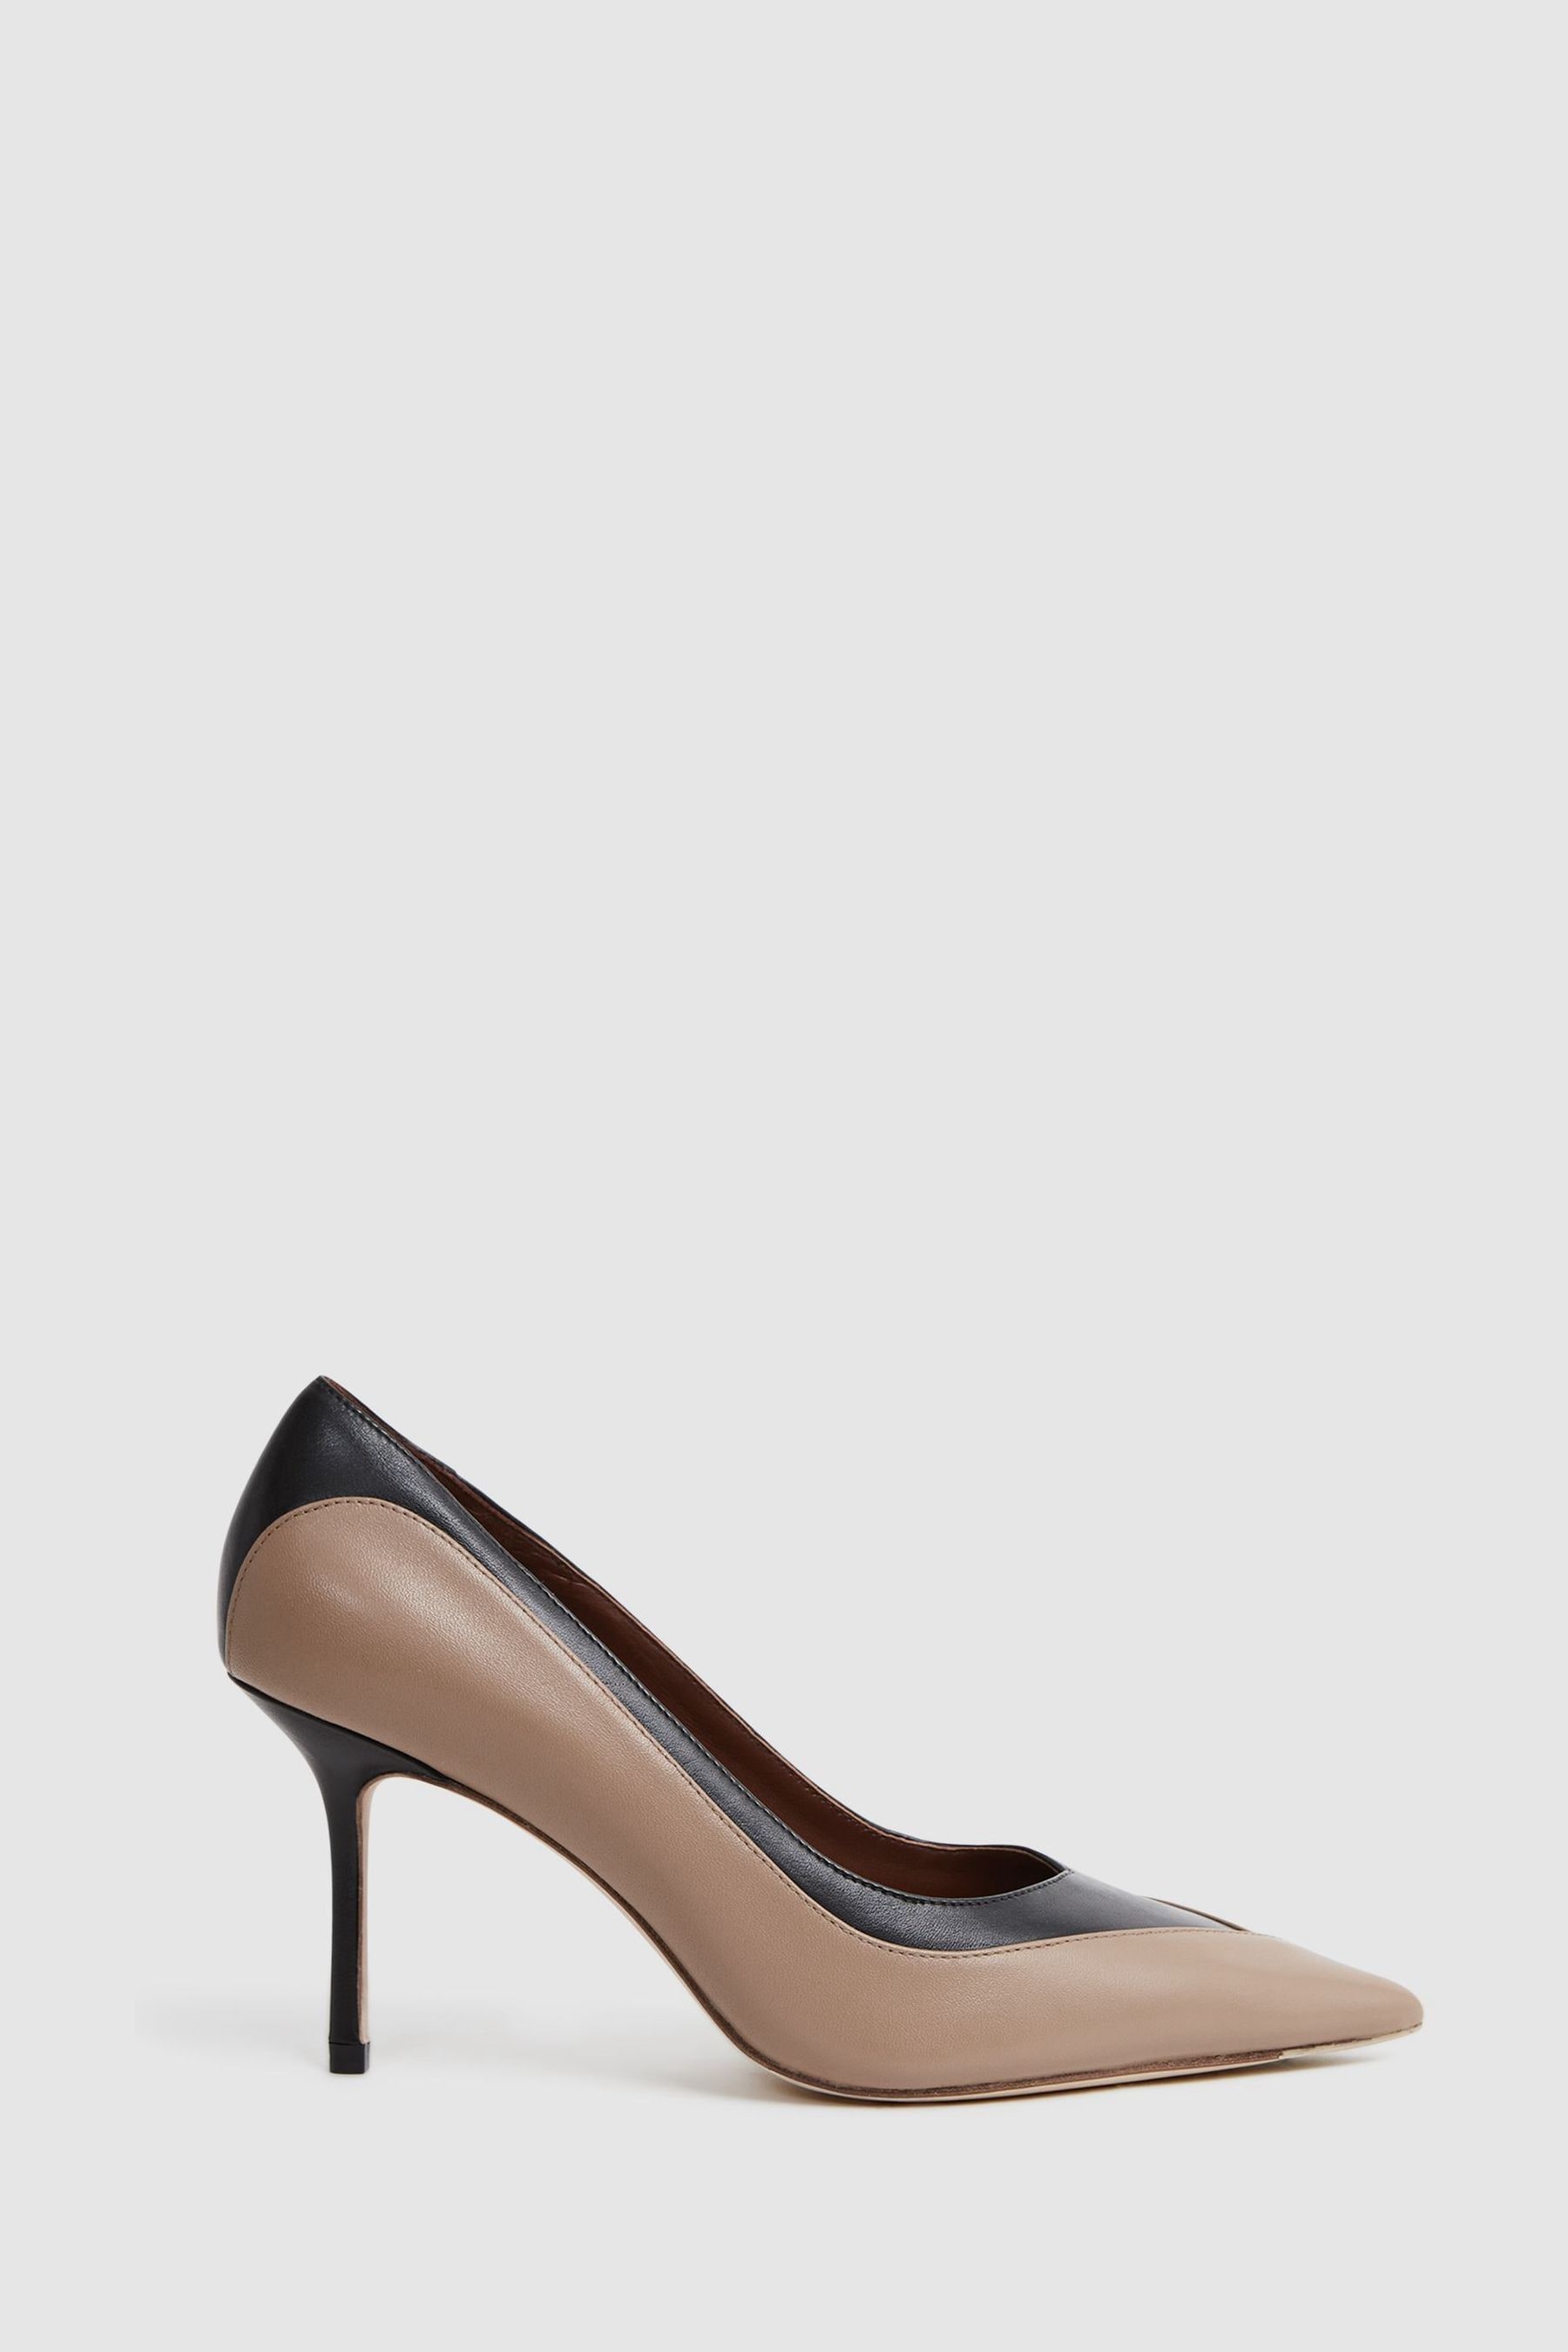 Reiss Gwyneth - Camel/black Leather Contrast Court Shoes, Uk 8 Eu 41